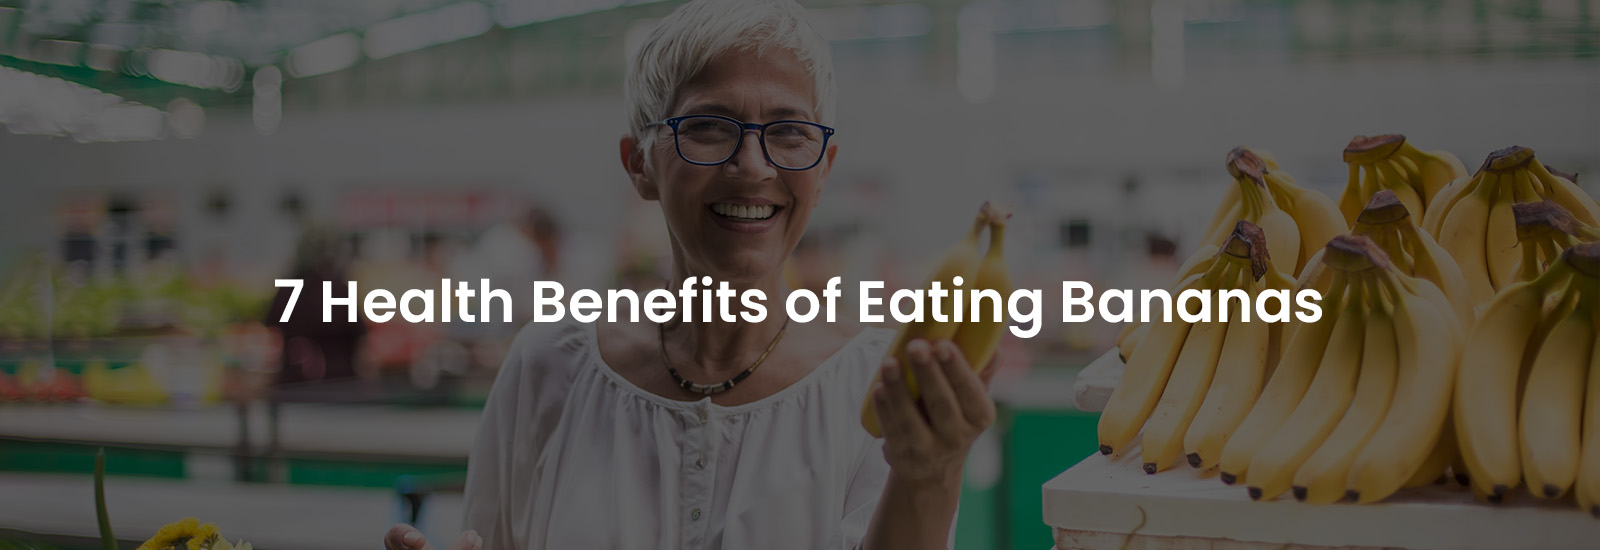 7 Health Benefits of Eating Bananas | Banner Image